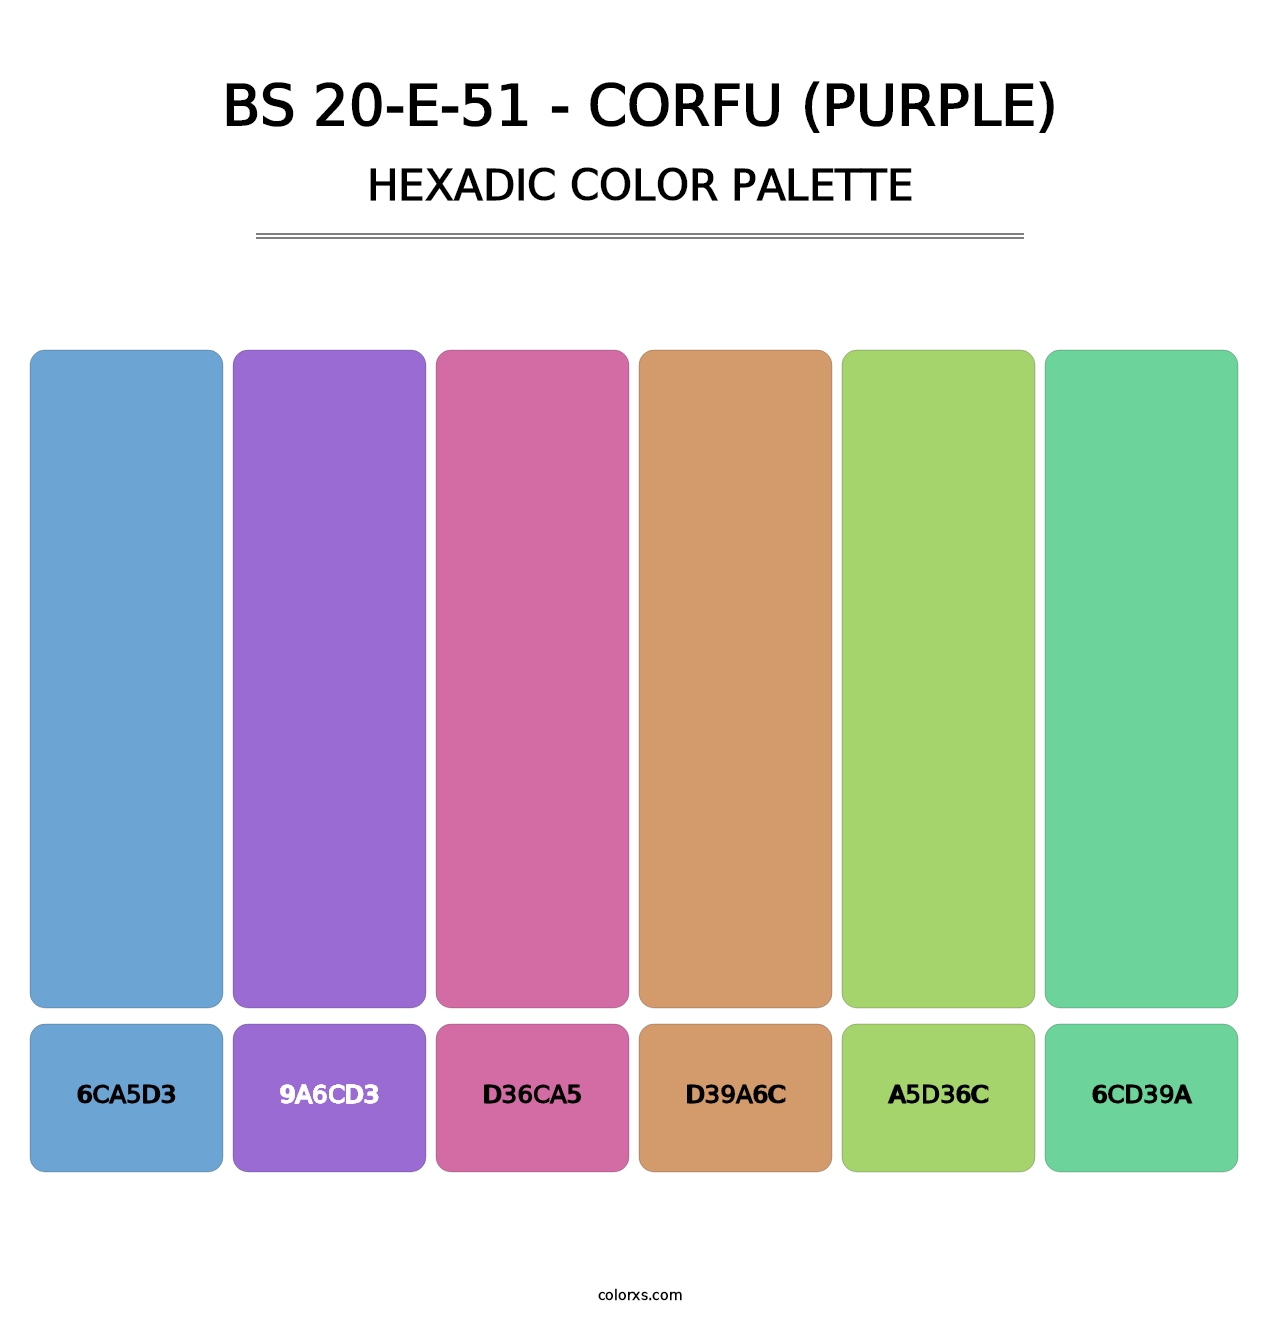 BS 20-E-51 - Corfu (Purple) - Hexadic Color Palette